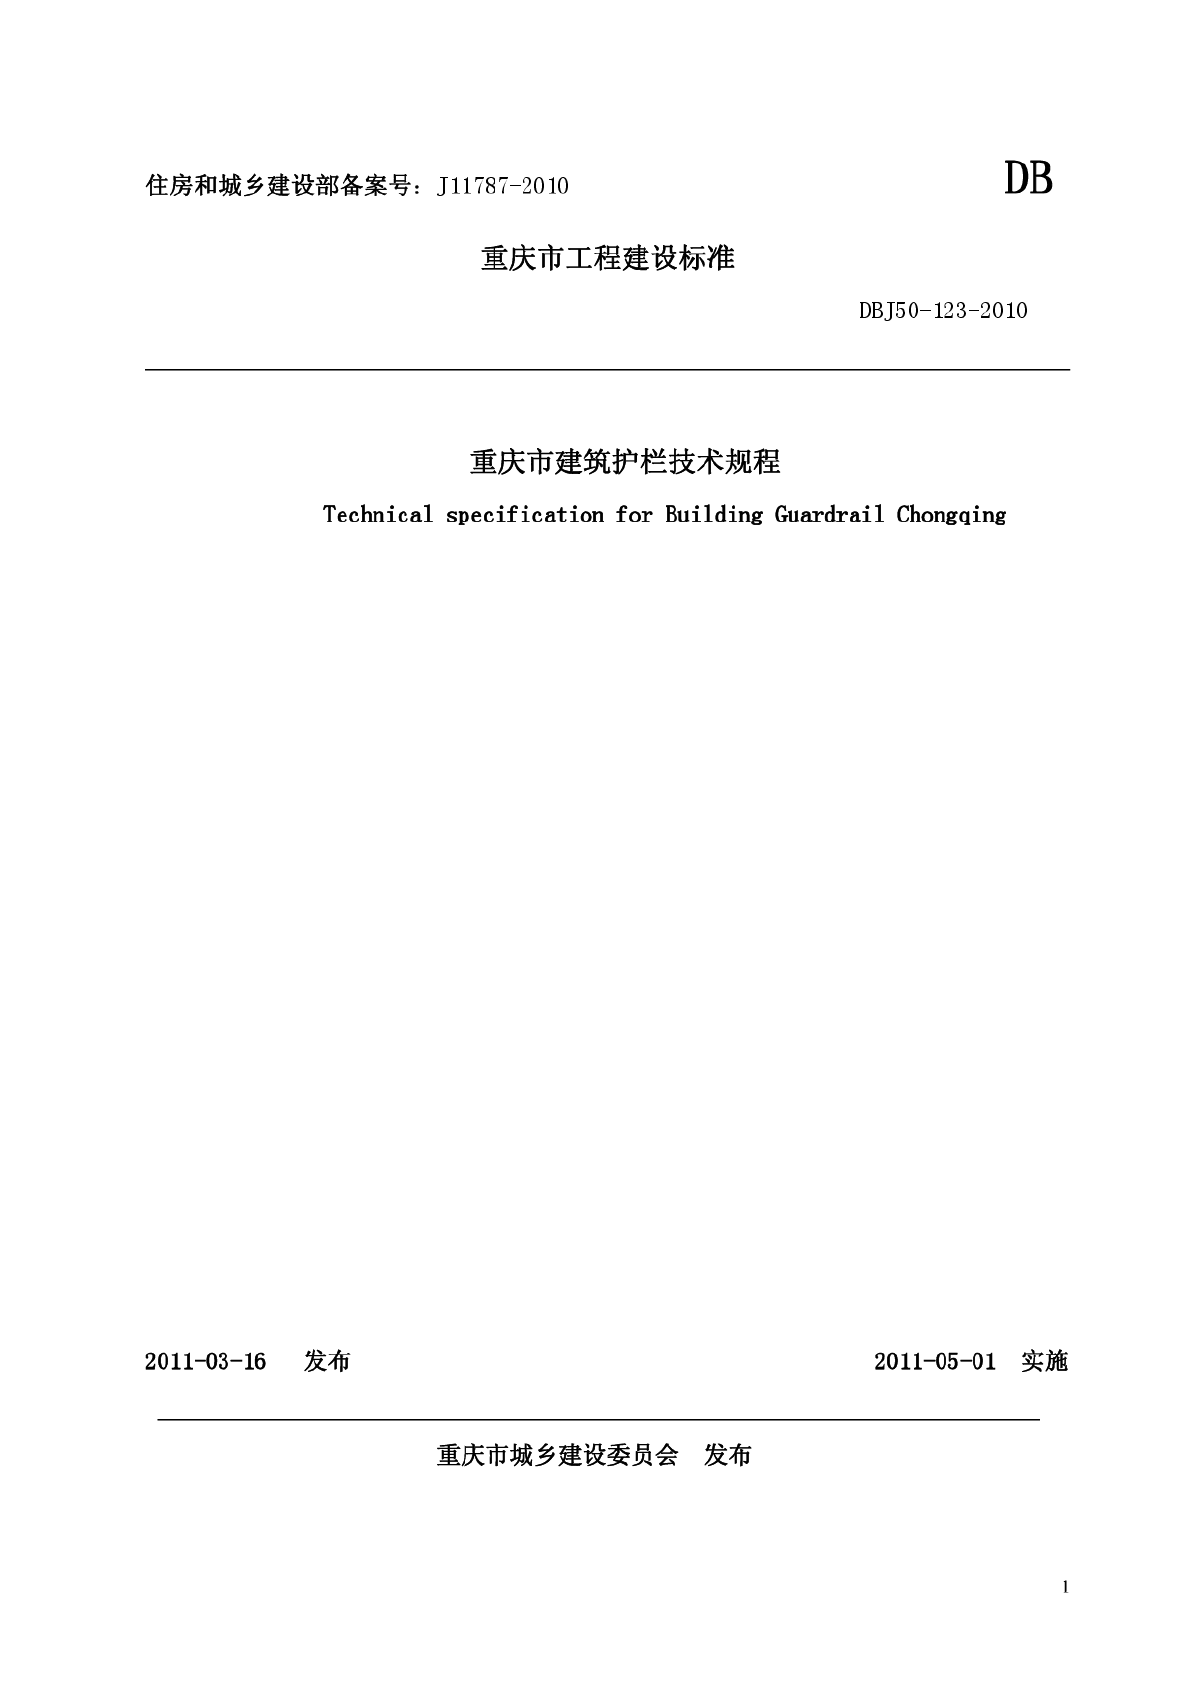 DBJ50123-2010重庆市建筑护栏技术规程-图一